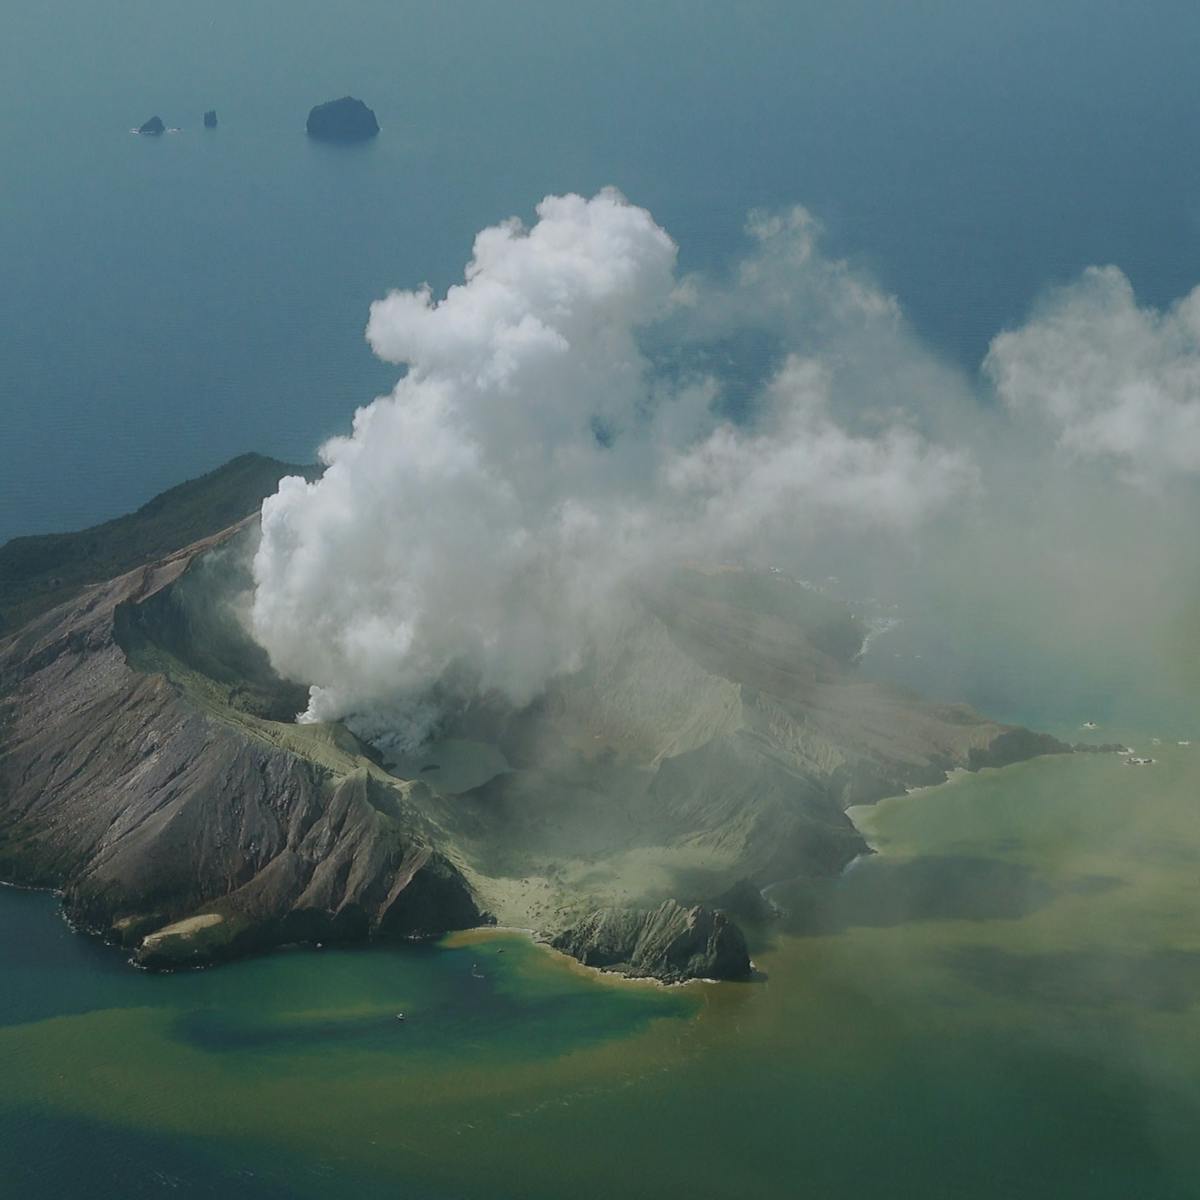 A smoking volcano amidst a yellow-blue-green ocean.